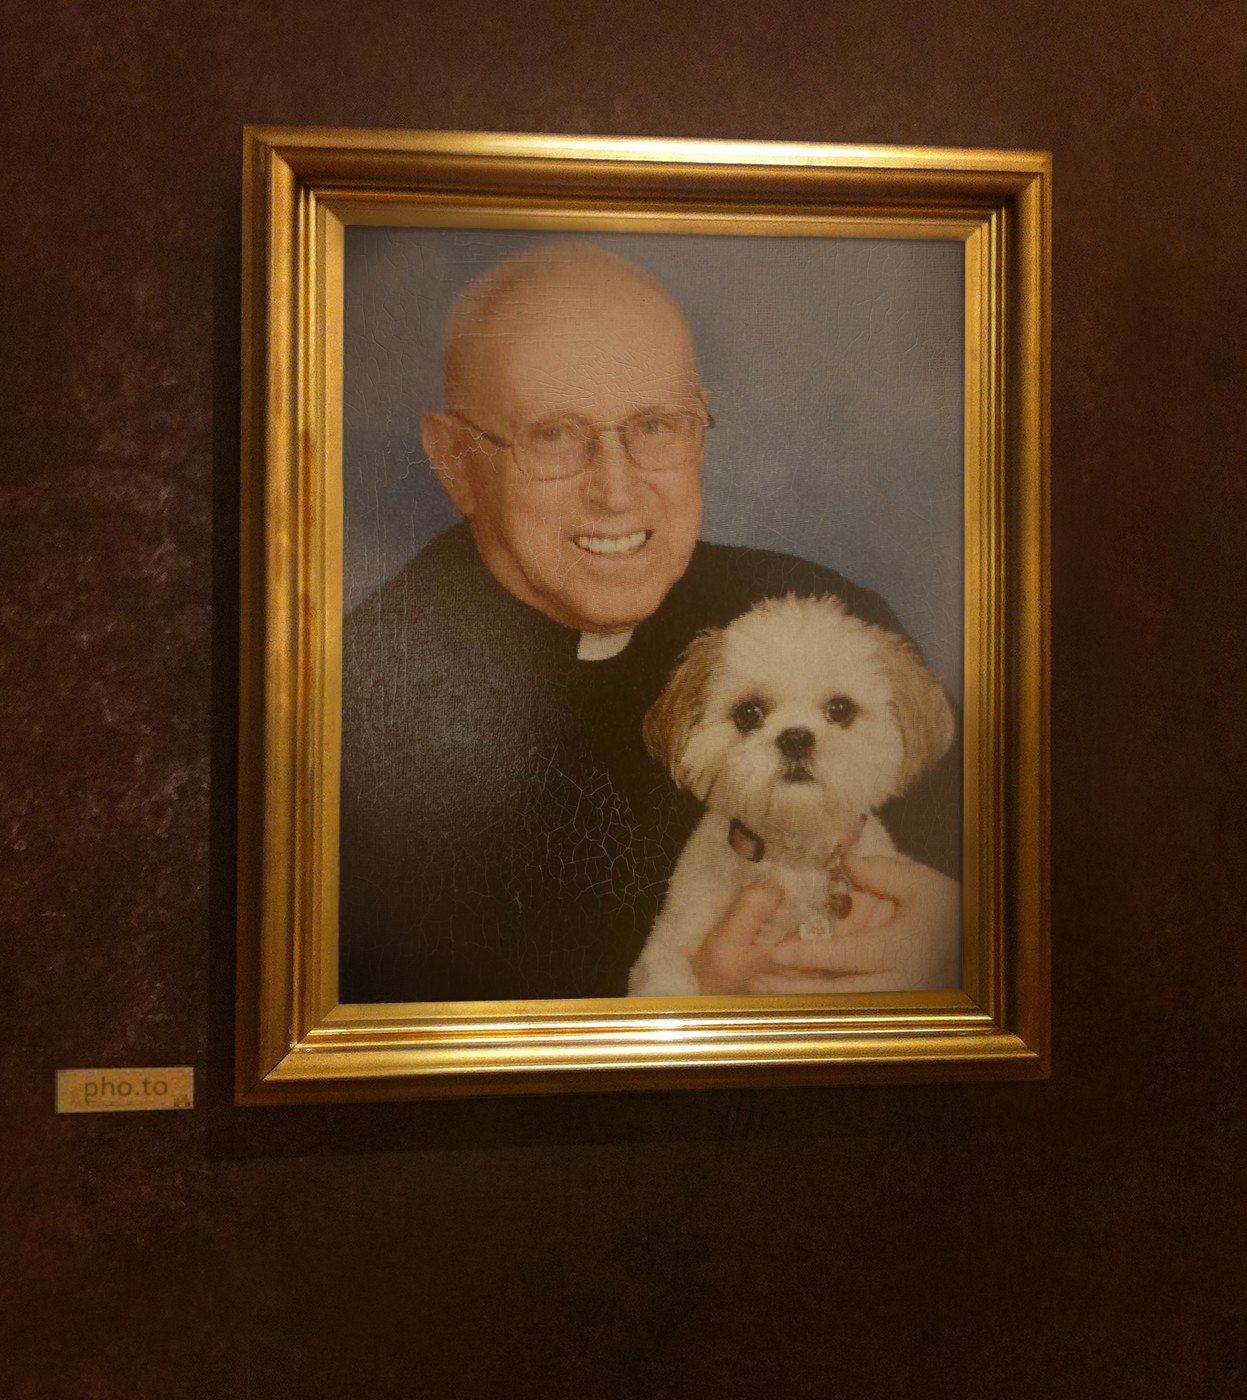 Father William C. Bush (St. Luke Catholic Church) - 9/19/15 - # 40